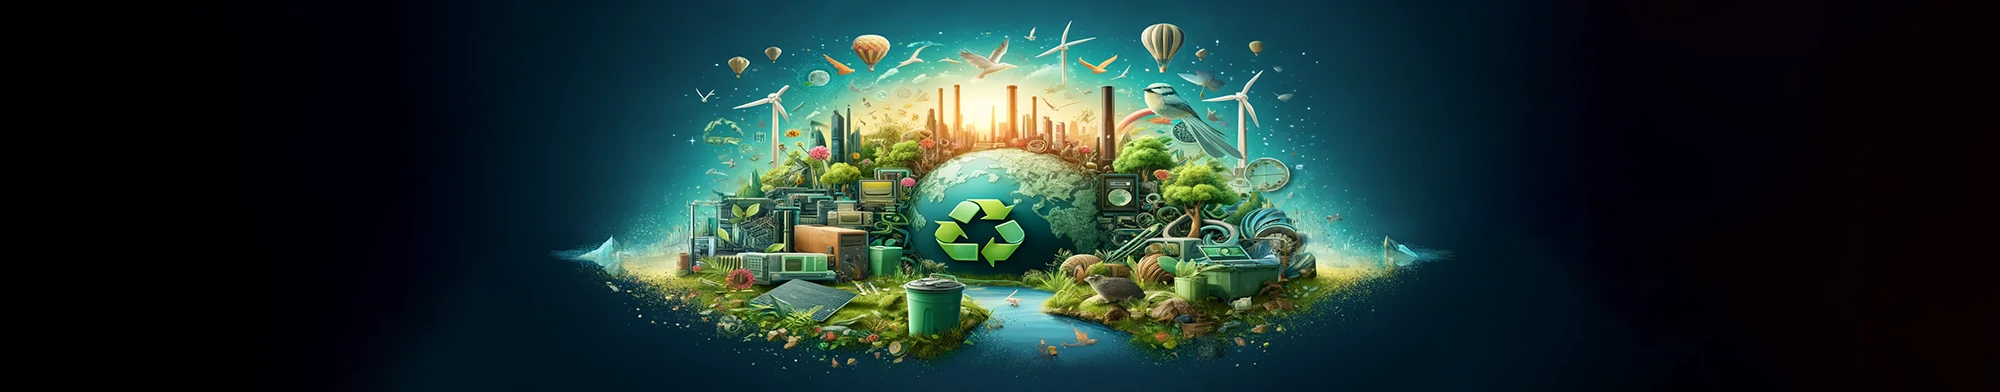 The Environmental Impact of E-Waste